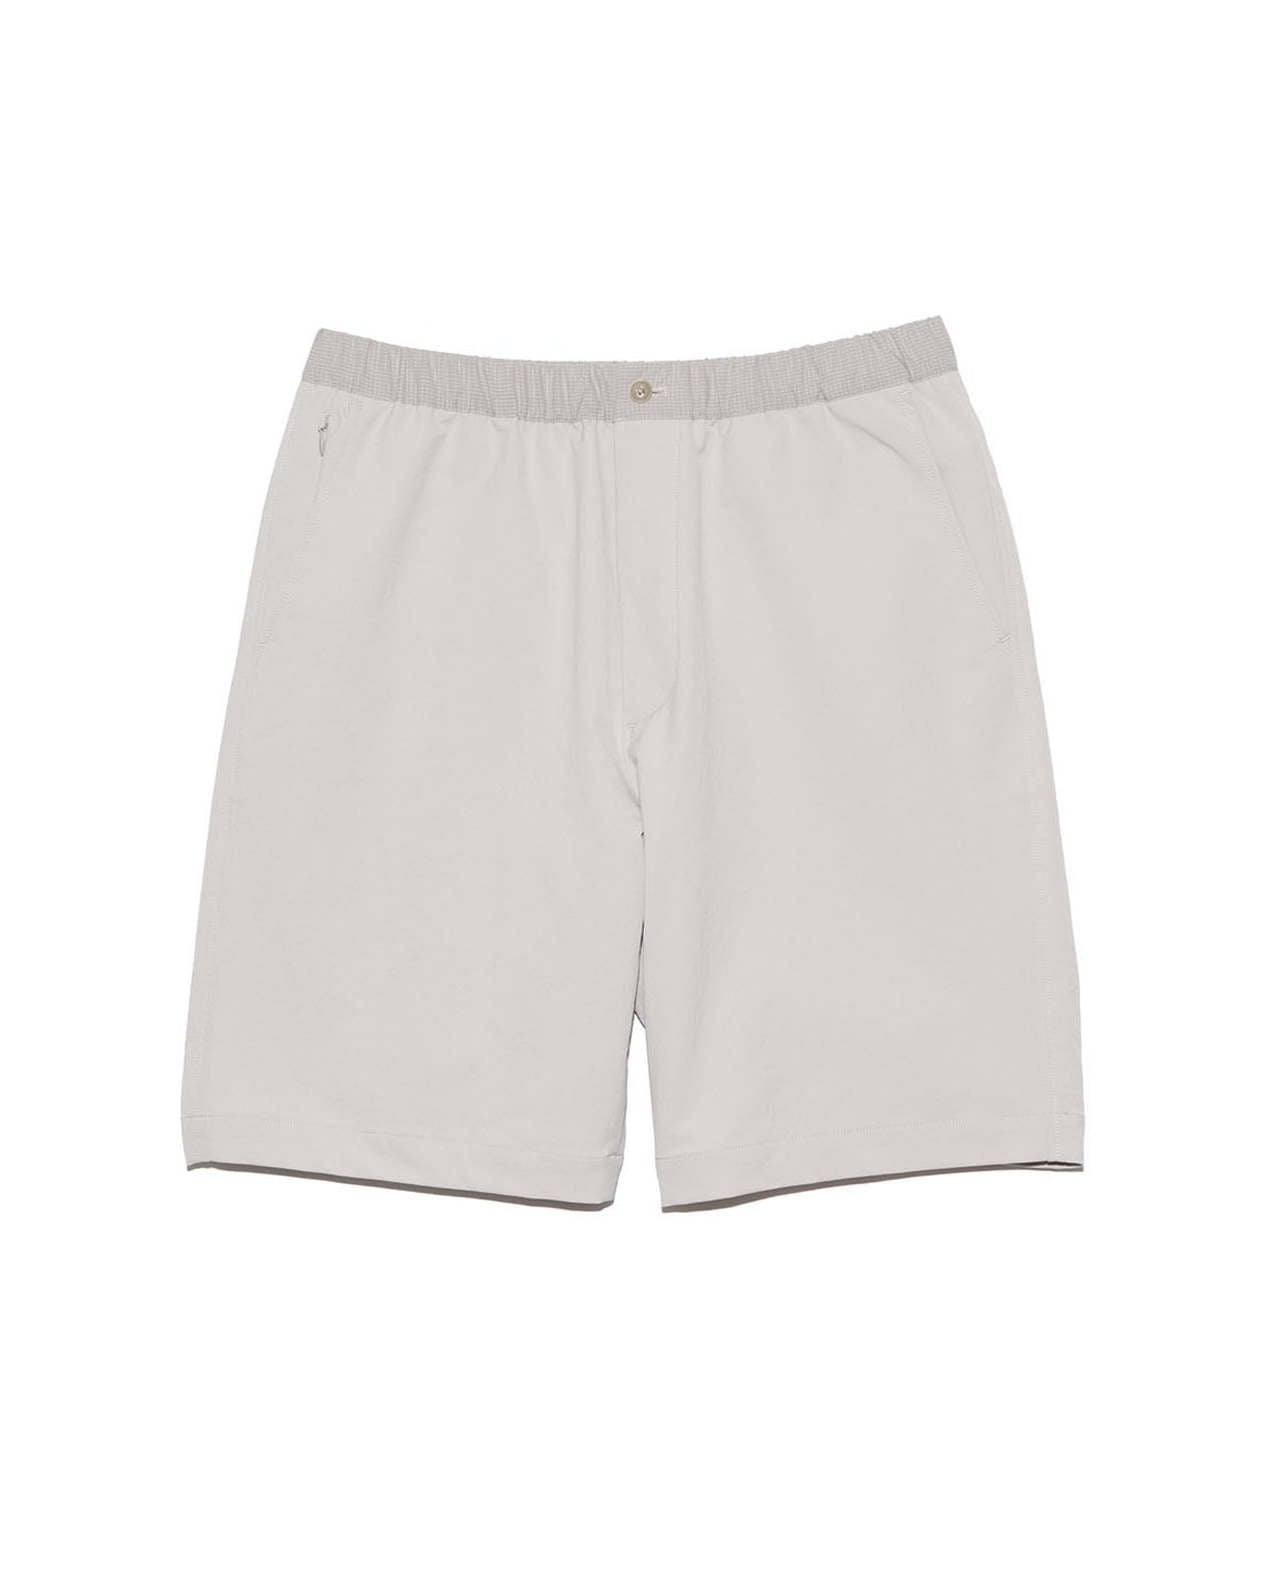 ALPHADRY Easy Shorts - Pale Gray